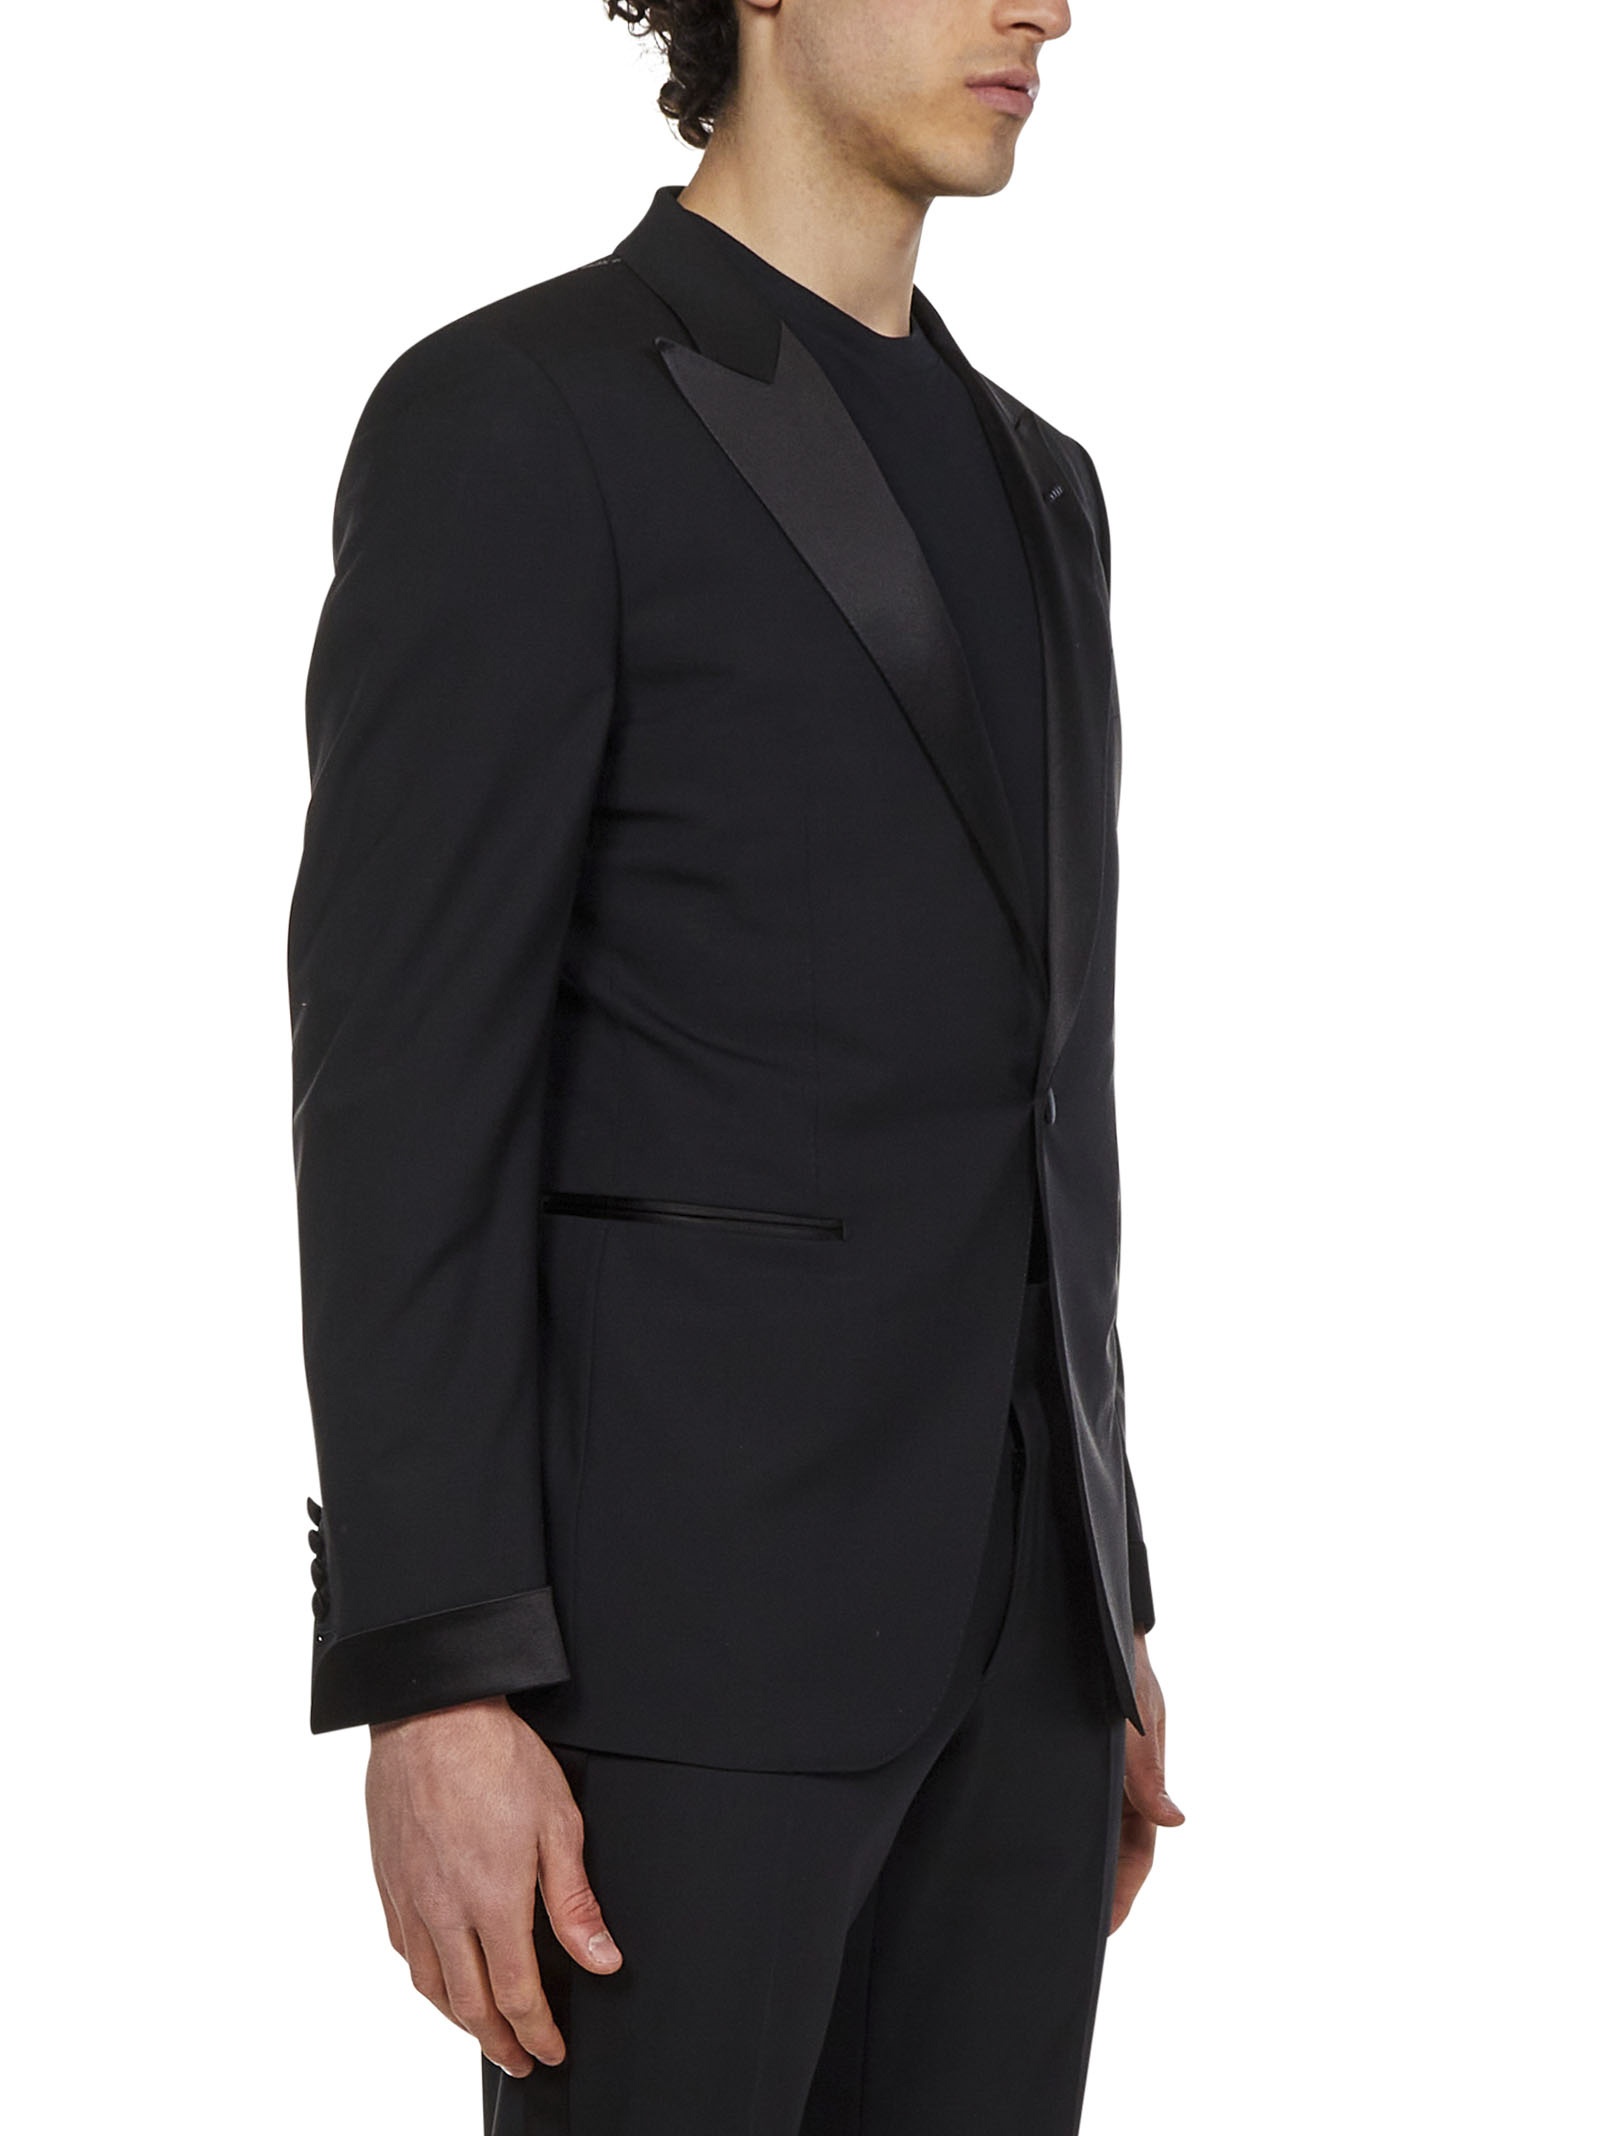 O 'Connor suit - 4